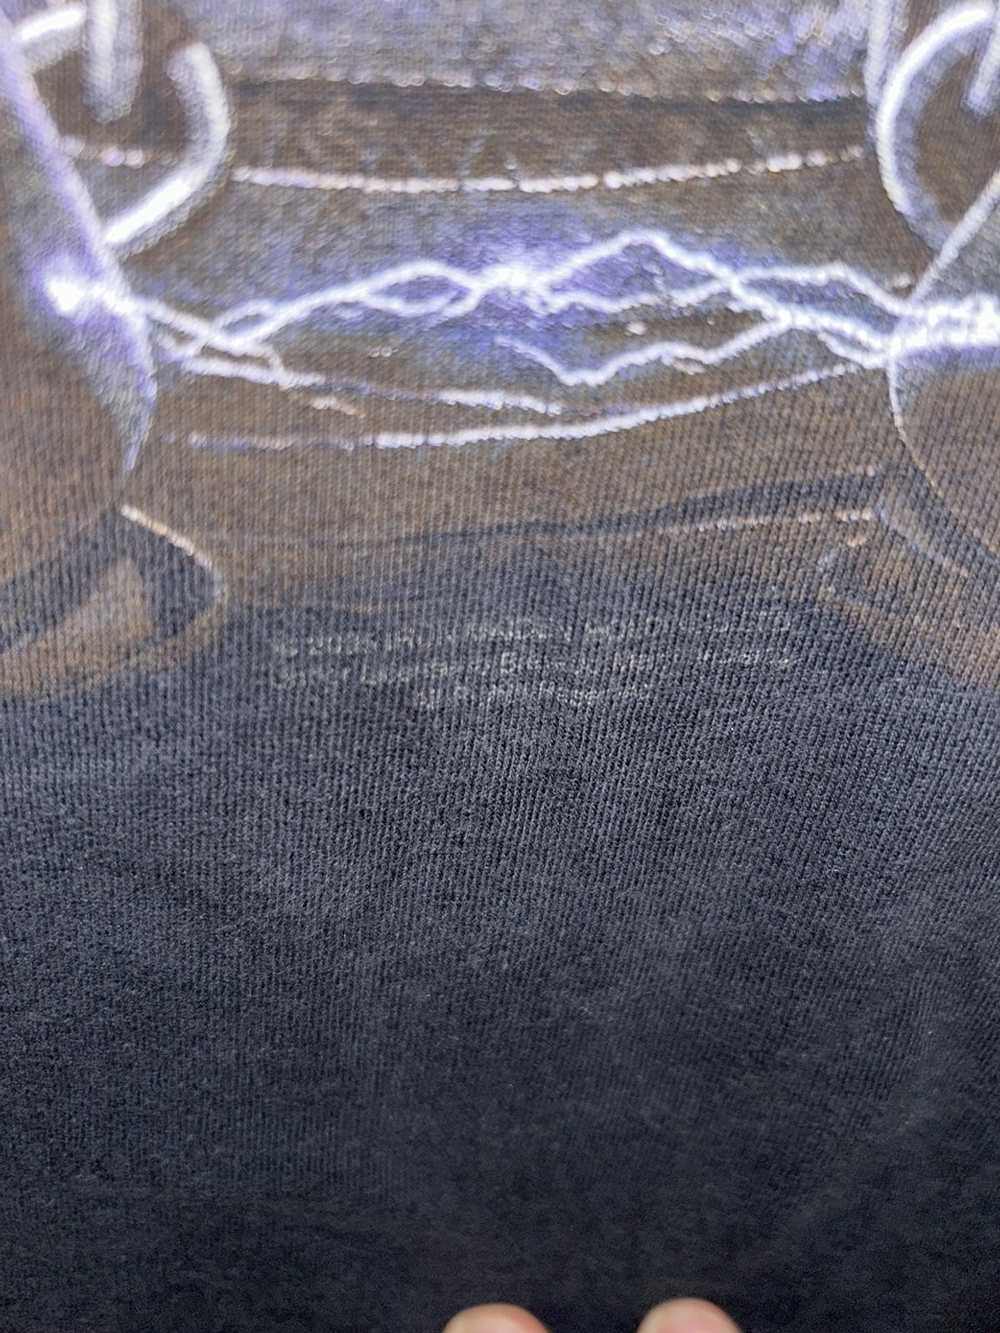 Band Tees × Vintage Vintage Iron Maiden Shirt - image 5